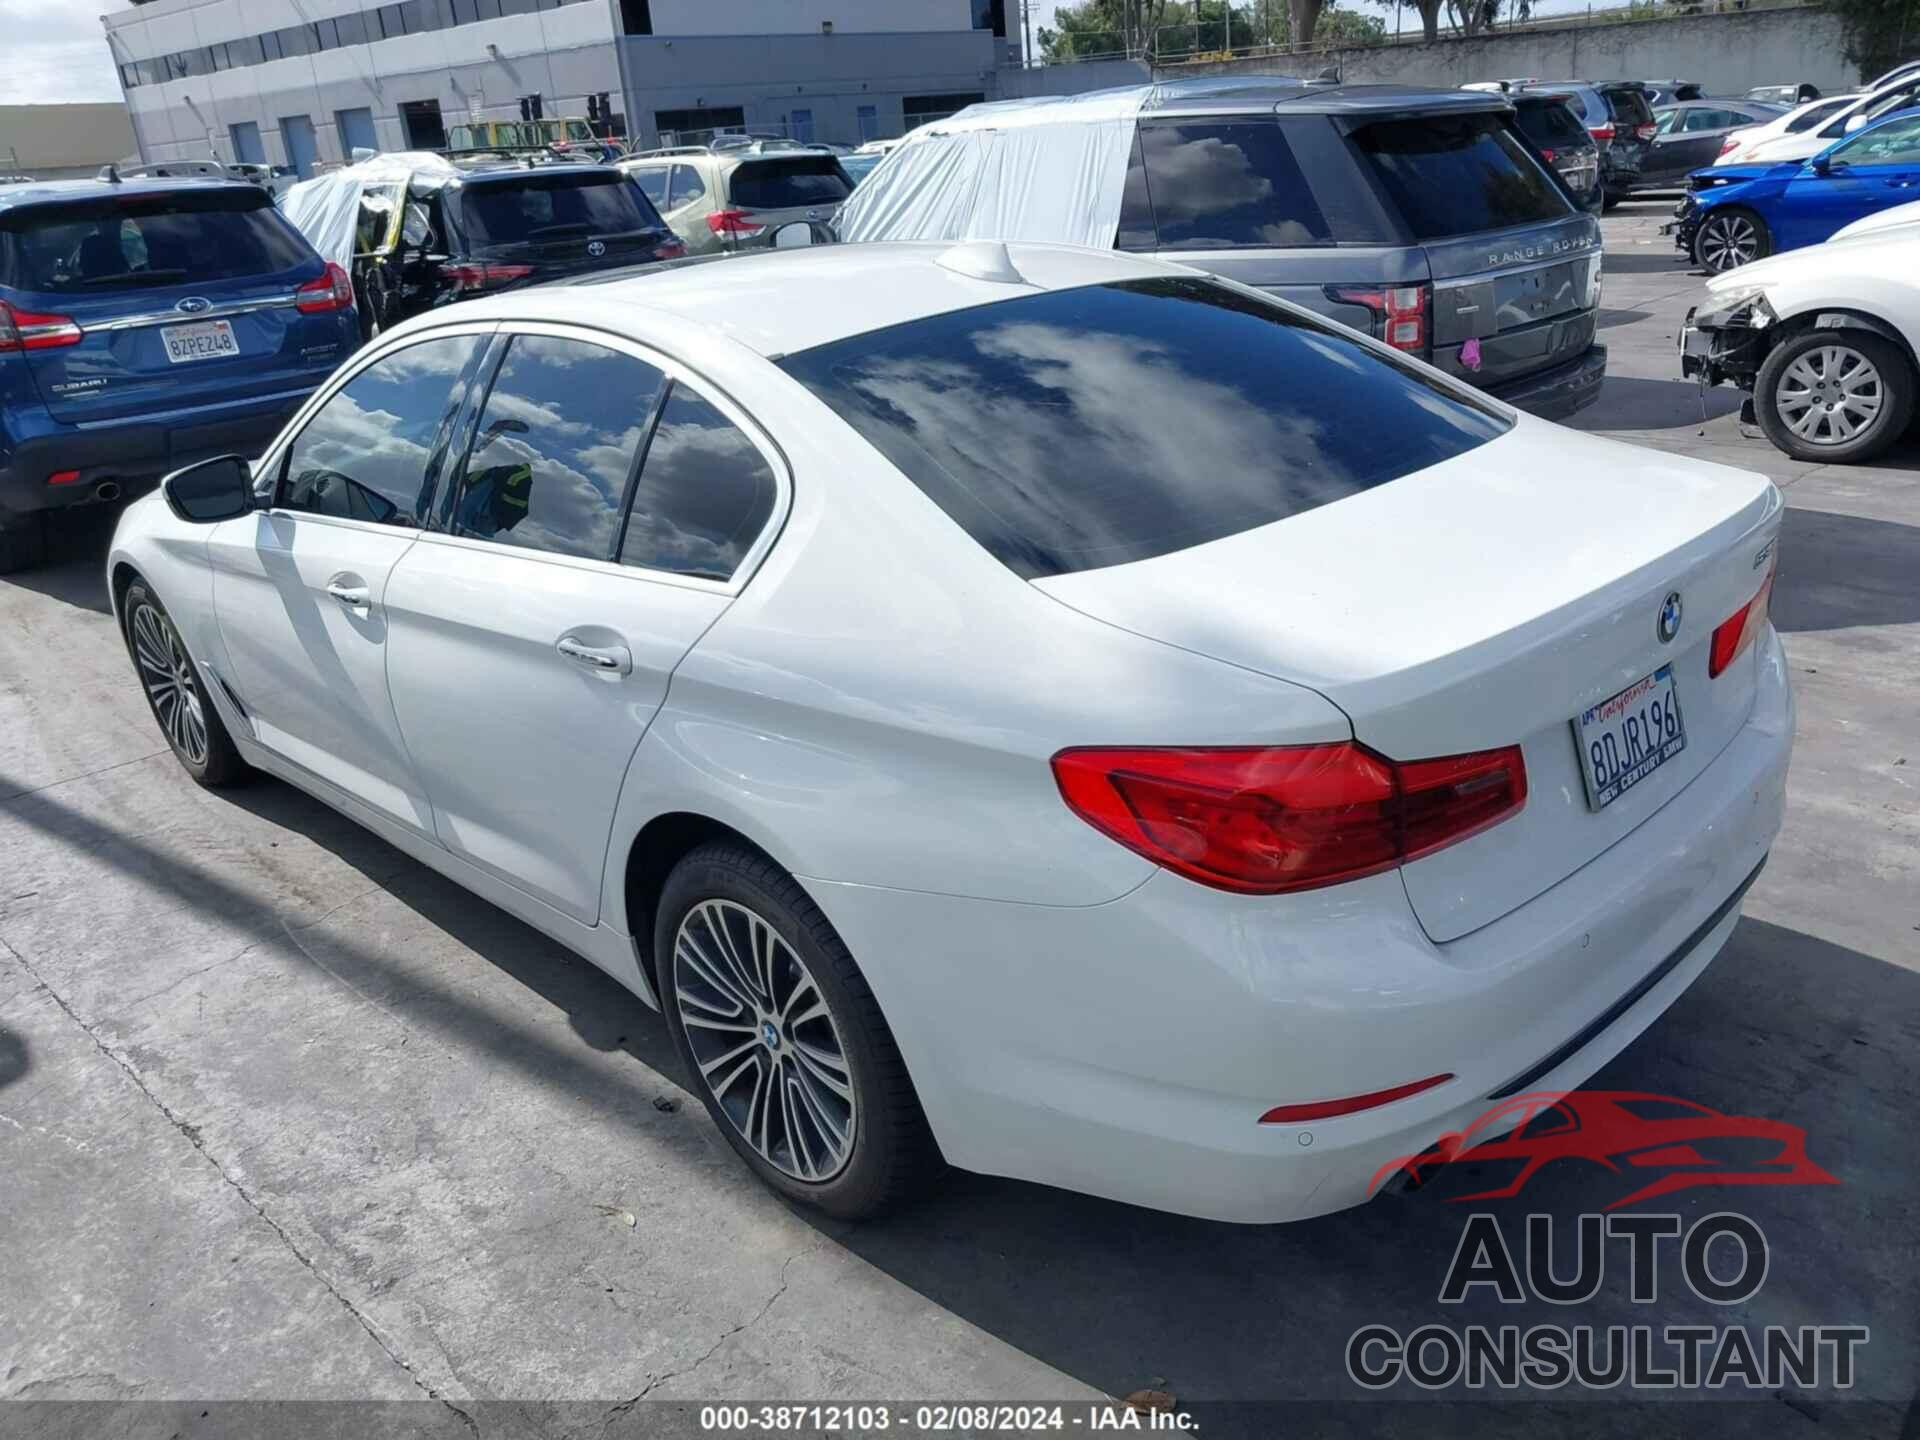 BMW 530 2018 - WBAJA5C52JWA38589